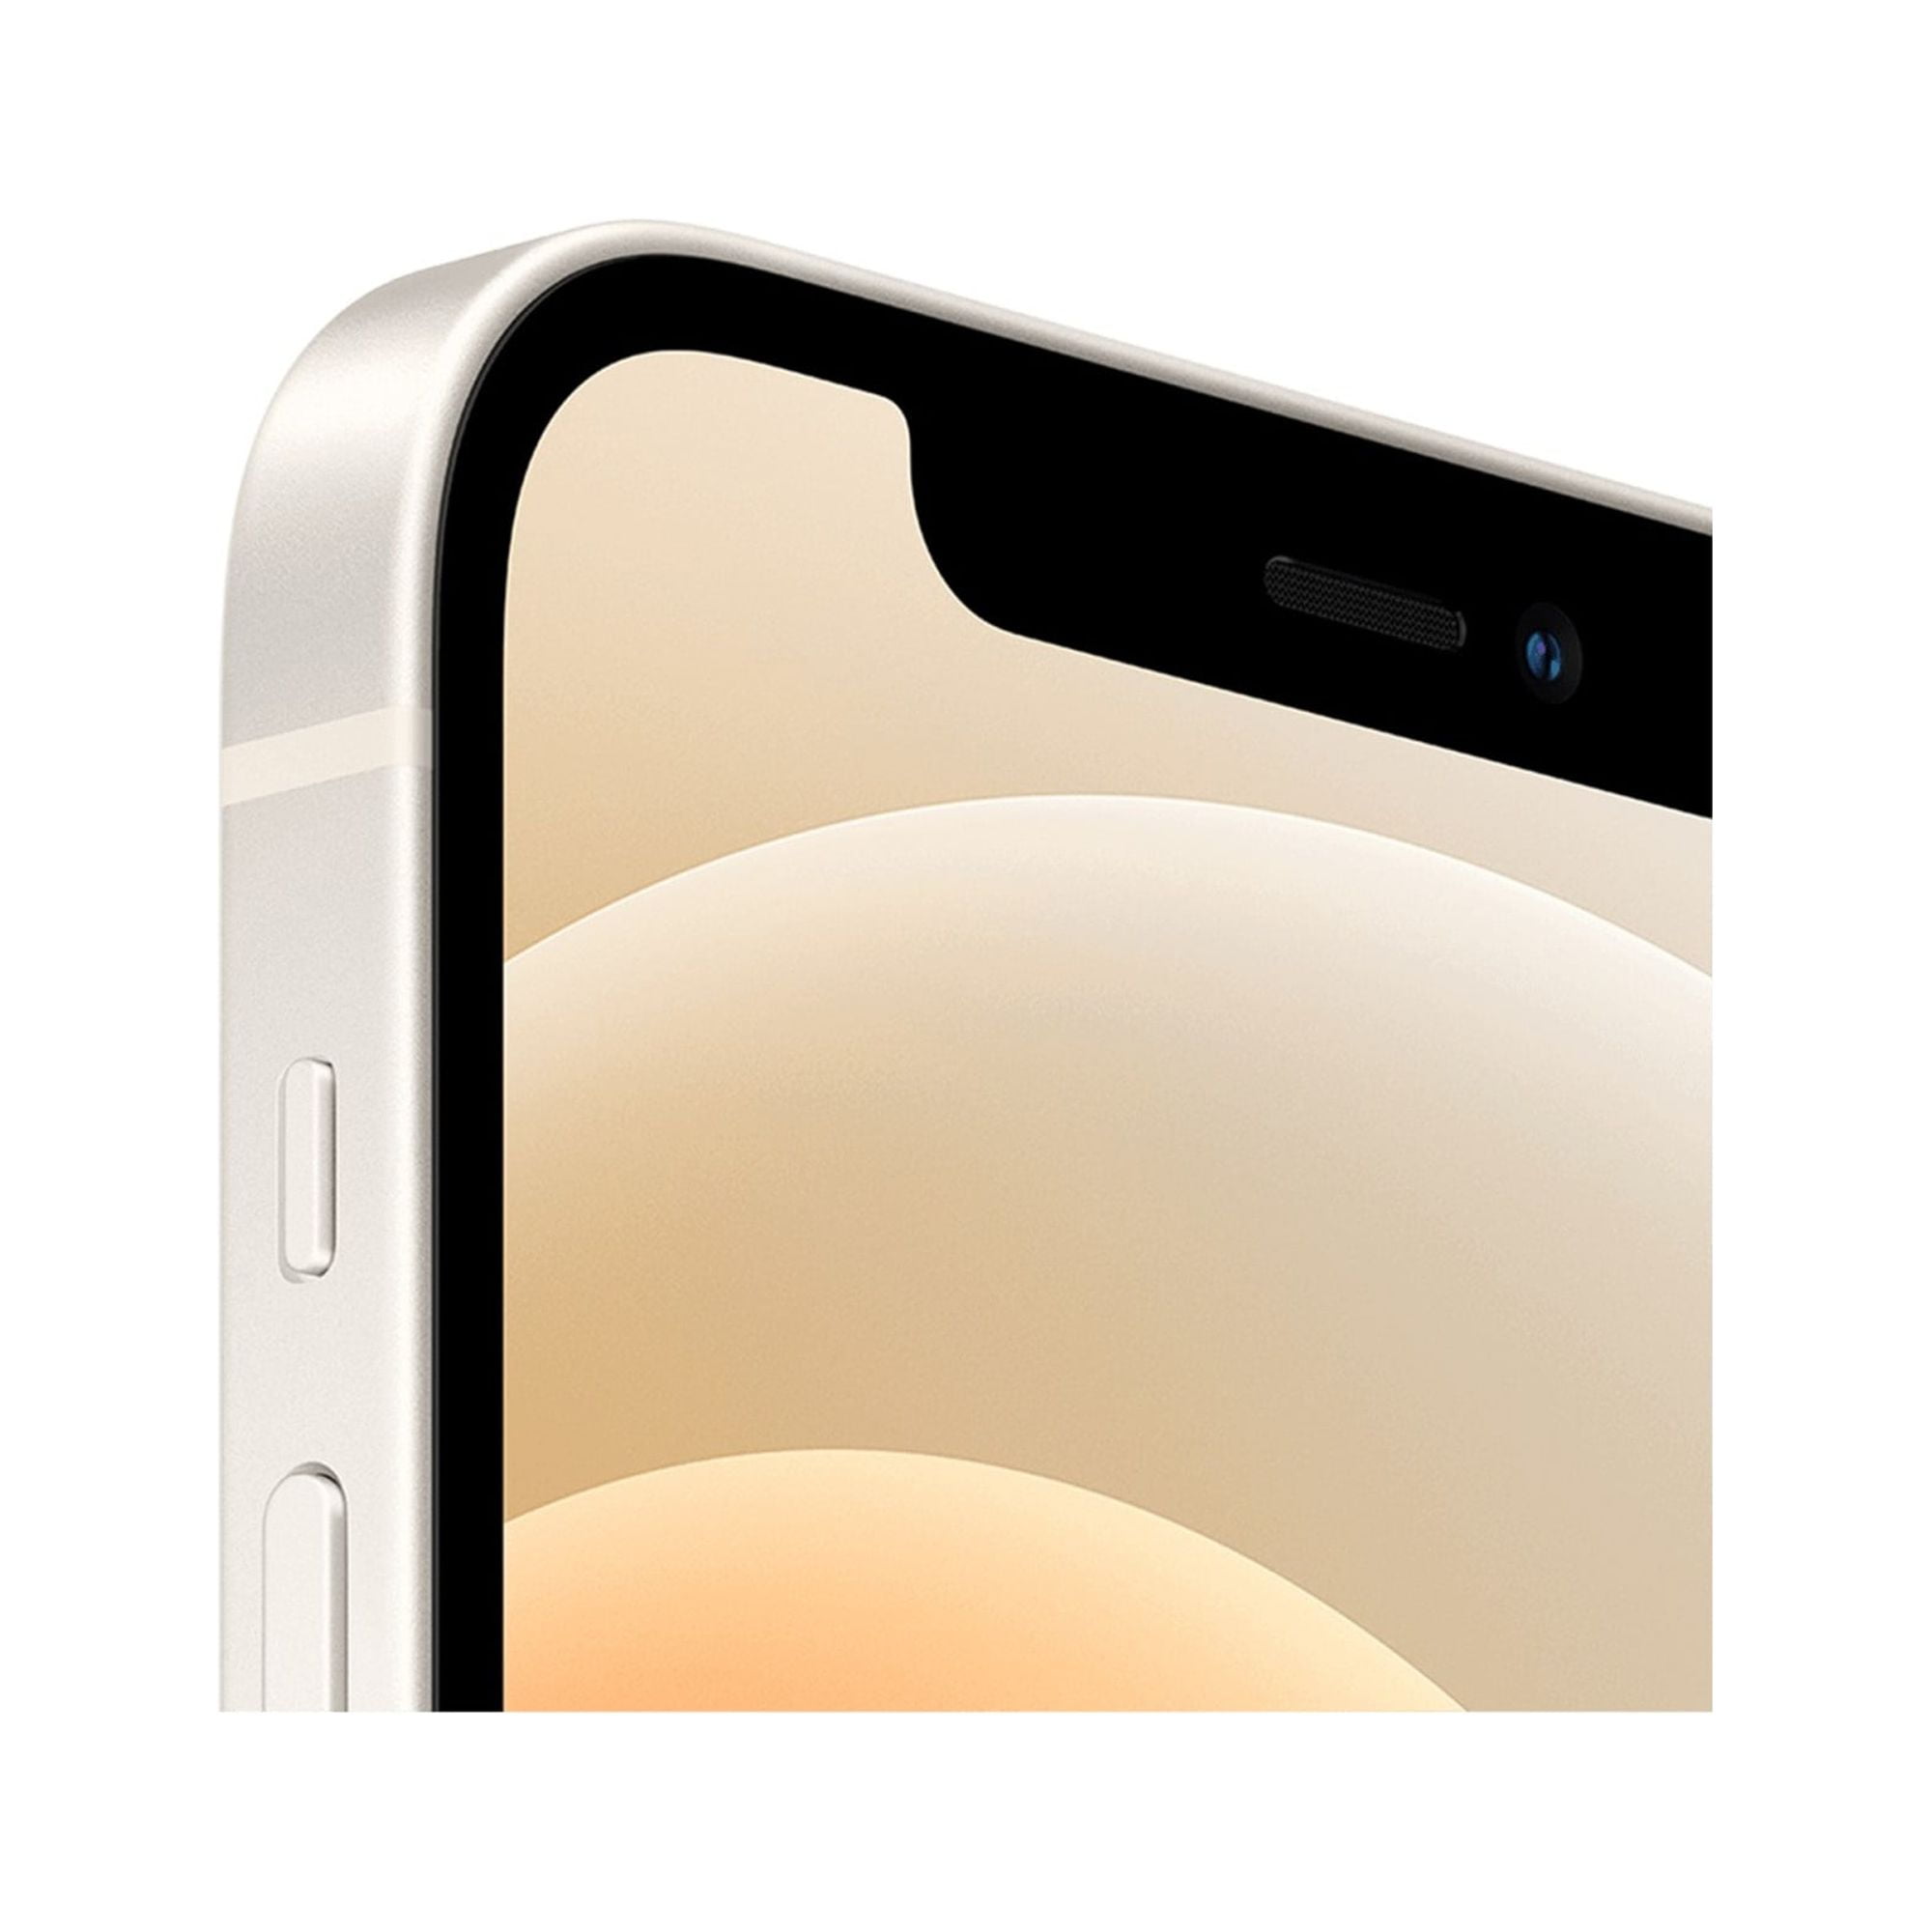 Open Box Apple iPhone 12 Mini 64GB Fully Unlocked (AT&T + T